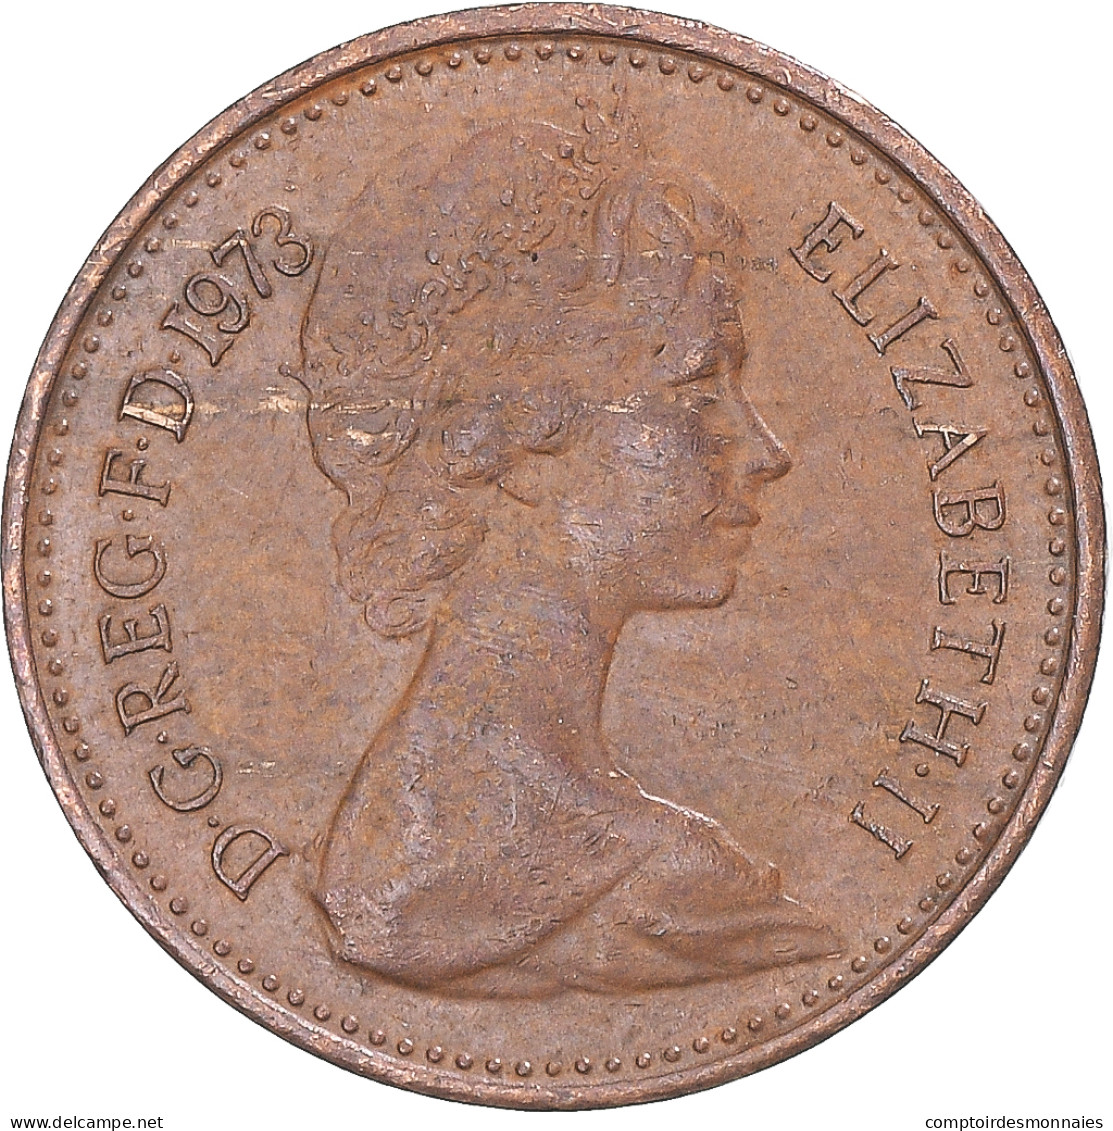 Monnaie, Grande-Bretagne, 1/2 New Penny, 1973 - 1/2 Penny & 1/2 New Penny